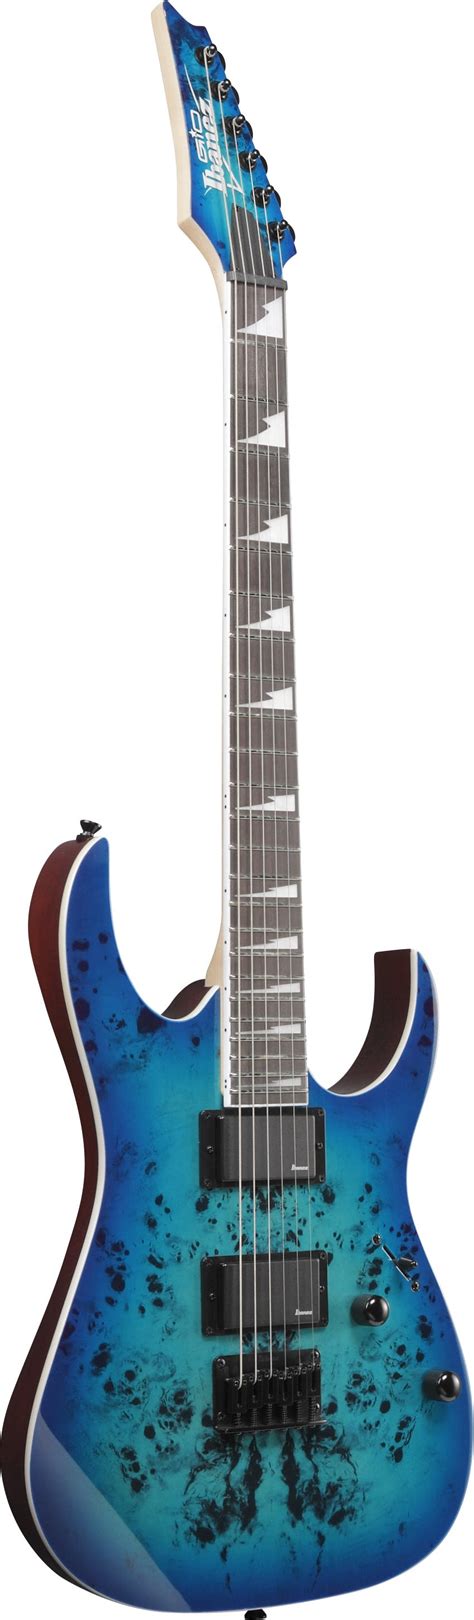 Ibanez Grgr221pa Aqb Gio Series Electric Guitar In Aqua Burst